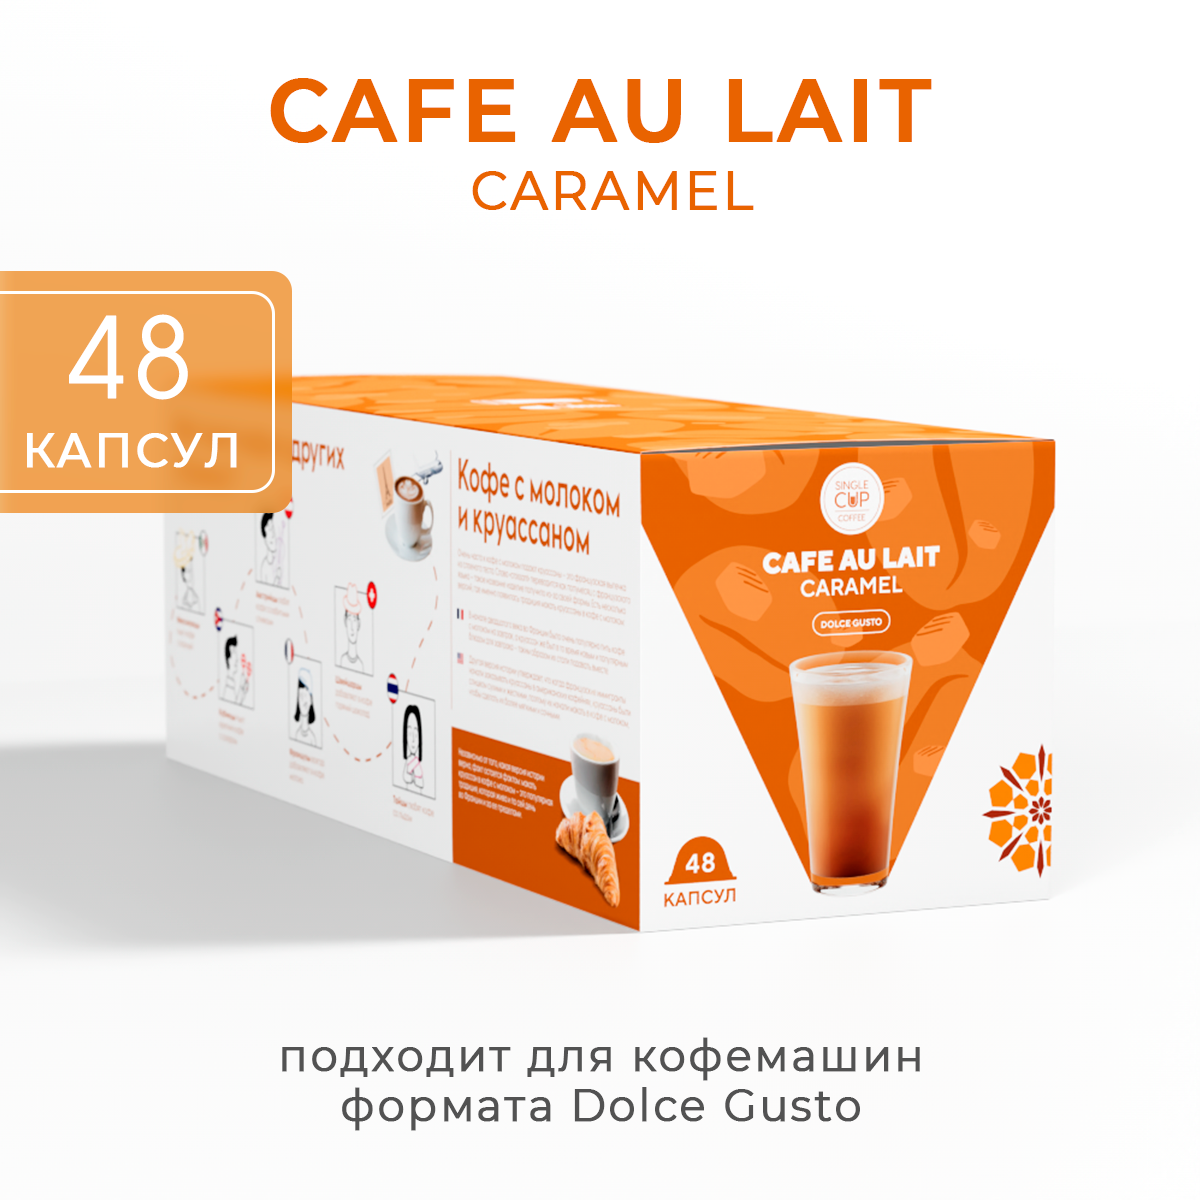 Капсулы для кофемашины Dolce Gusto формата "Cafe Au Lait Caramel" 48 шт. Single Cup Coffee